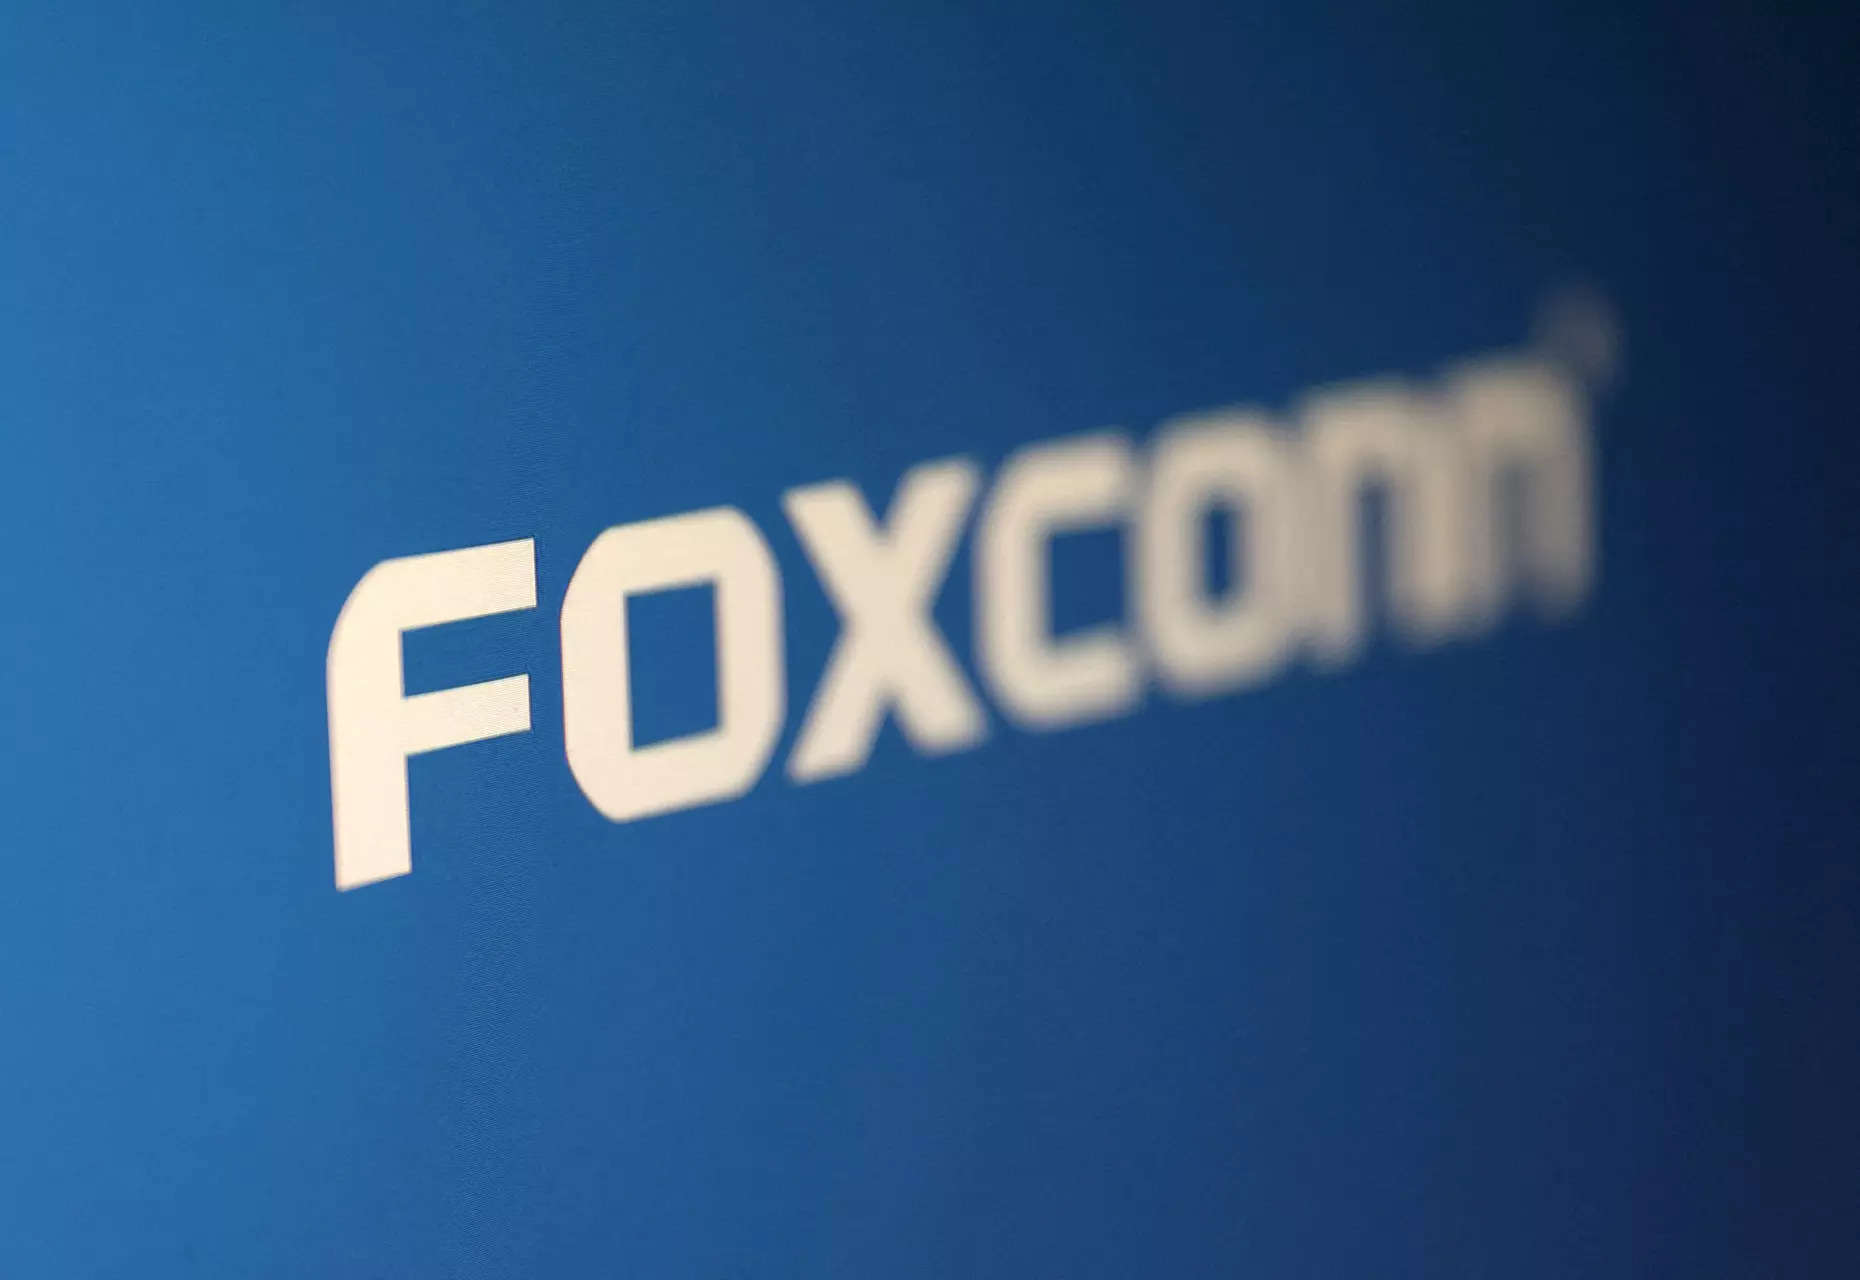 Apple supplier Foxconn